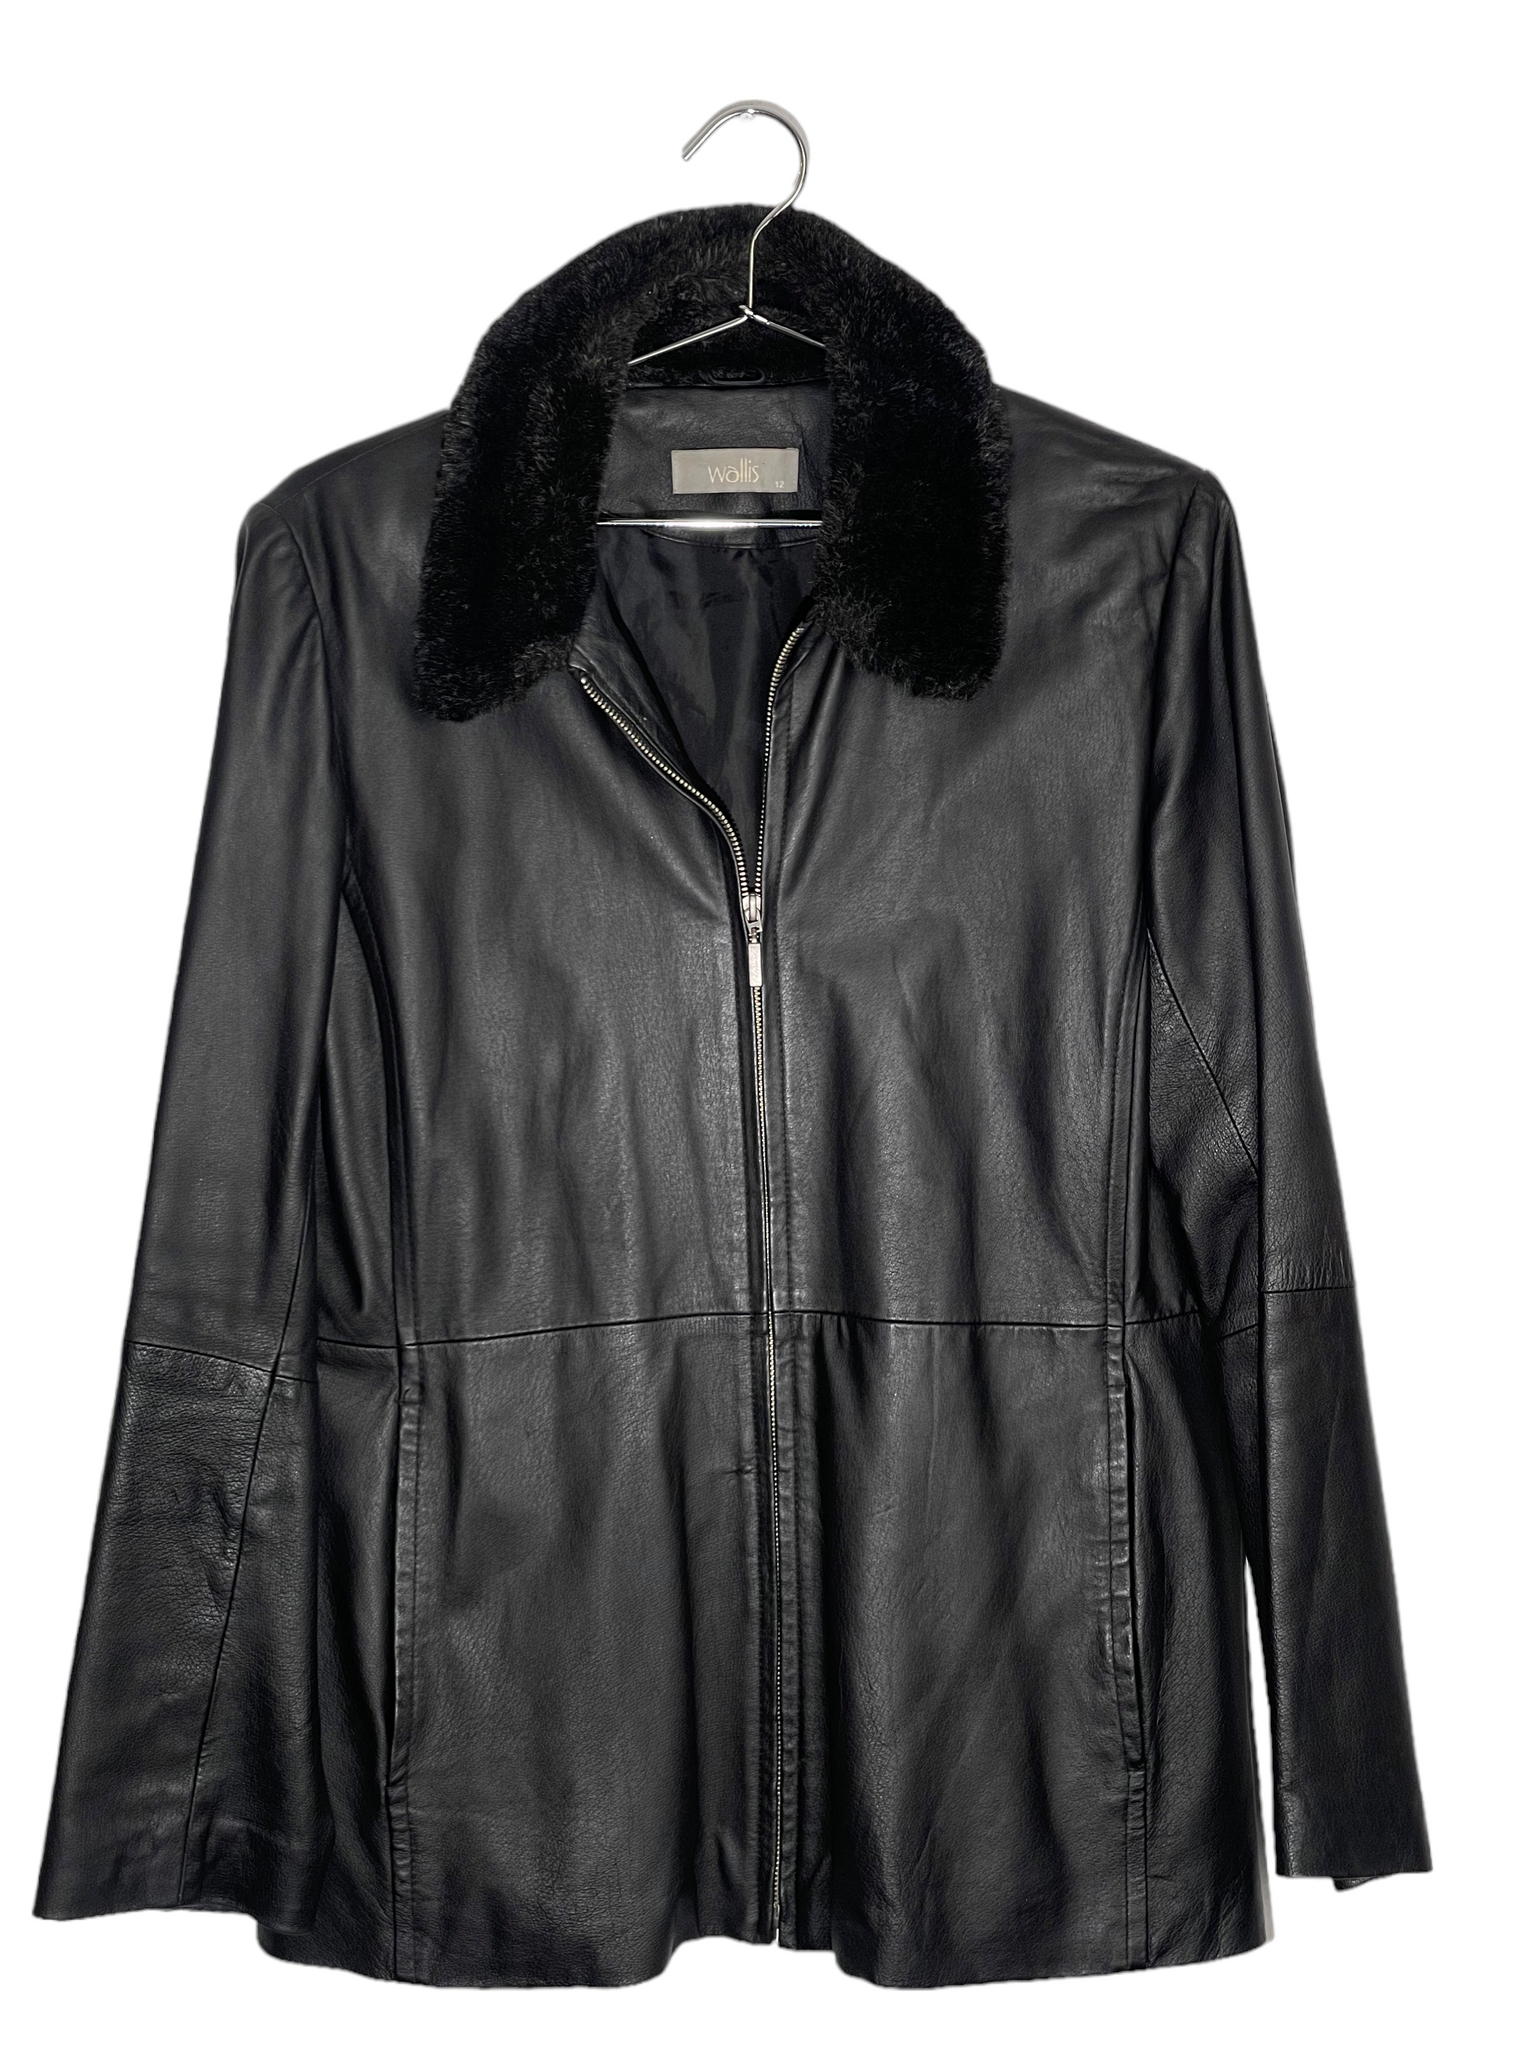 Black Leather Jacket With Fuzzy Neck